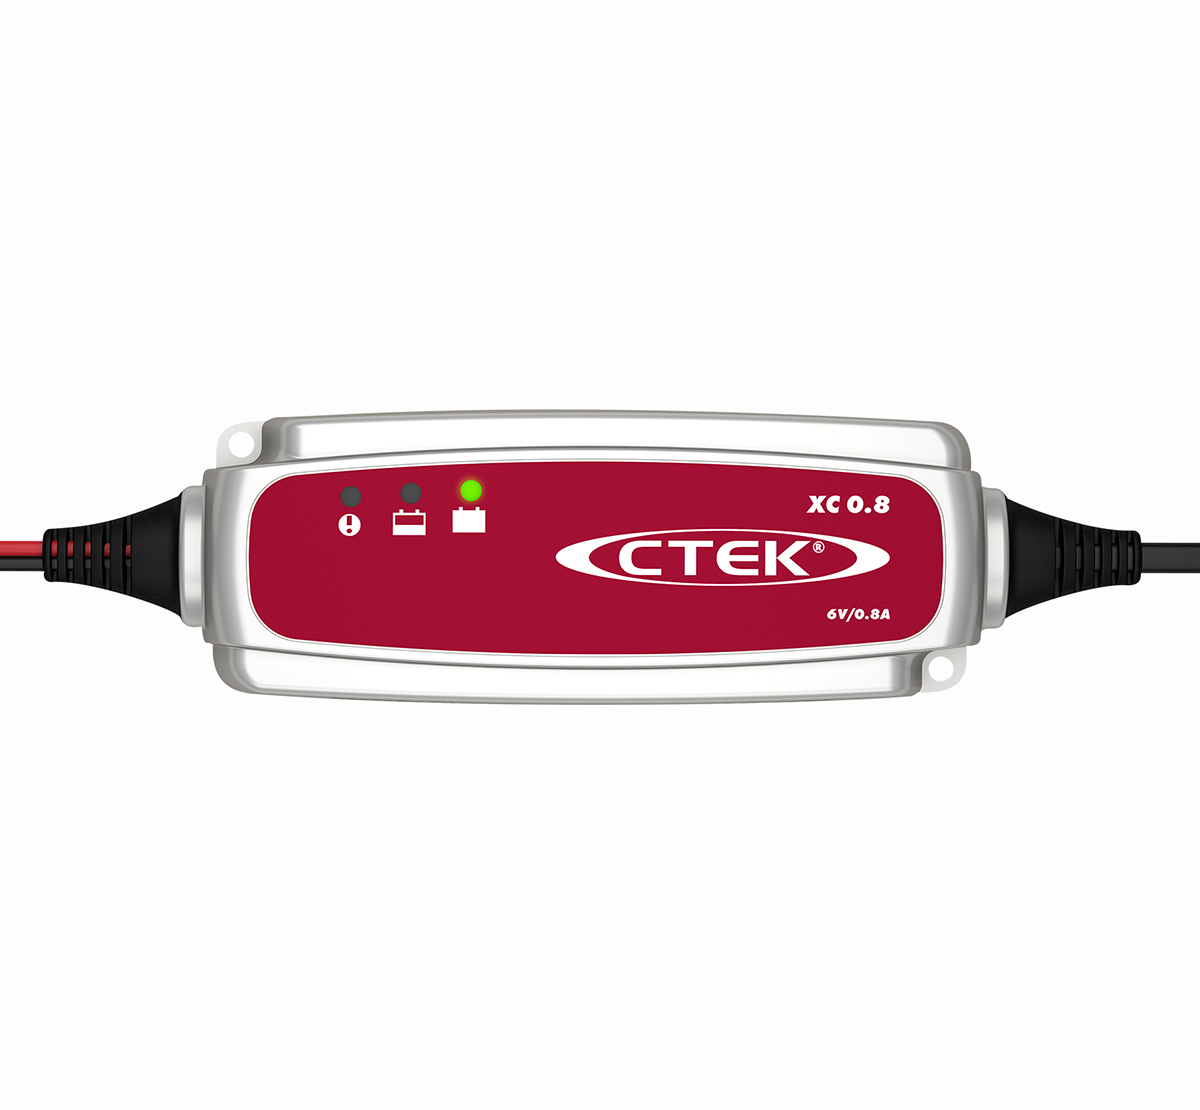 CTEK XC 0.8 6V Compact Battery Charger